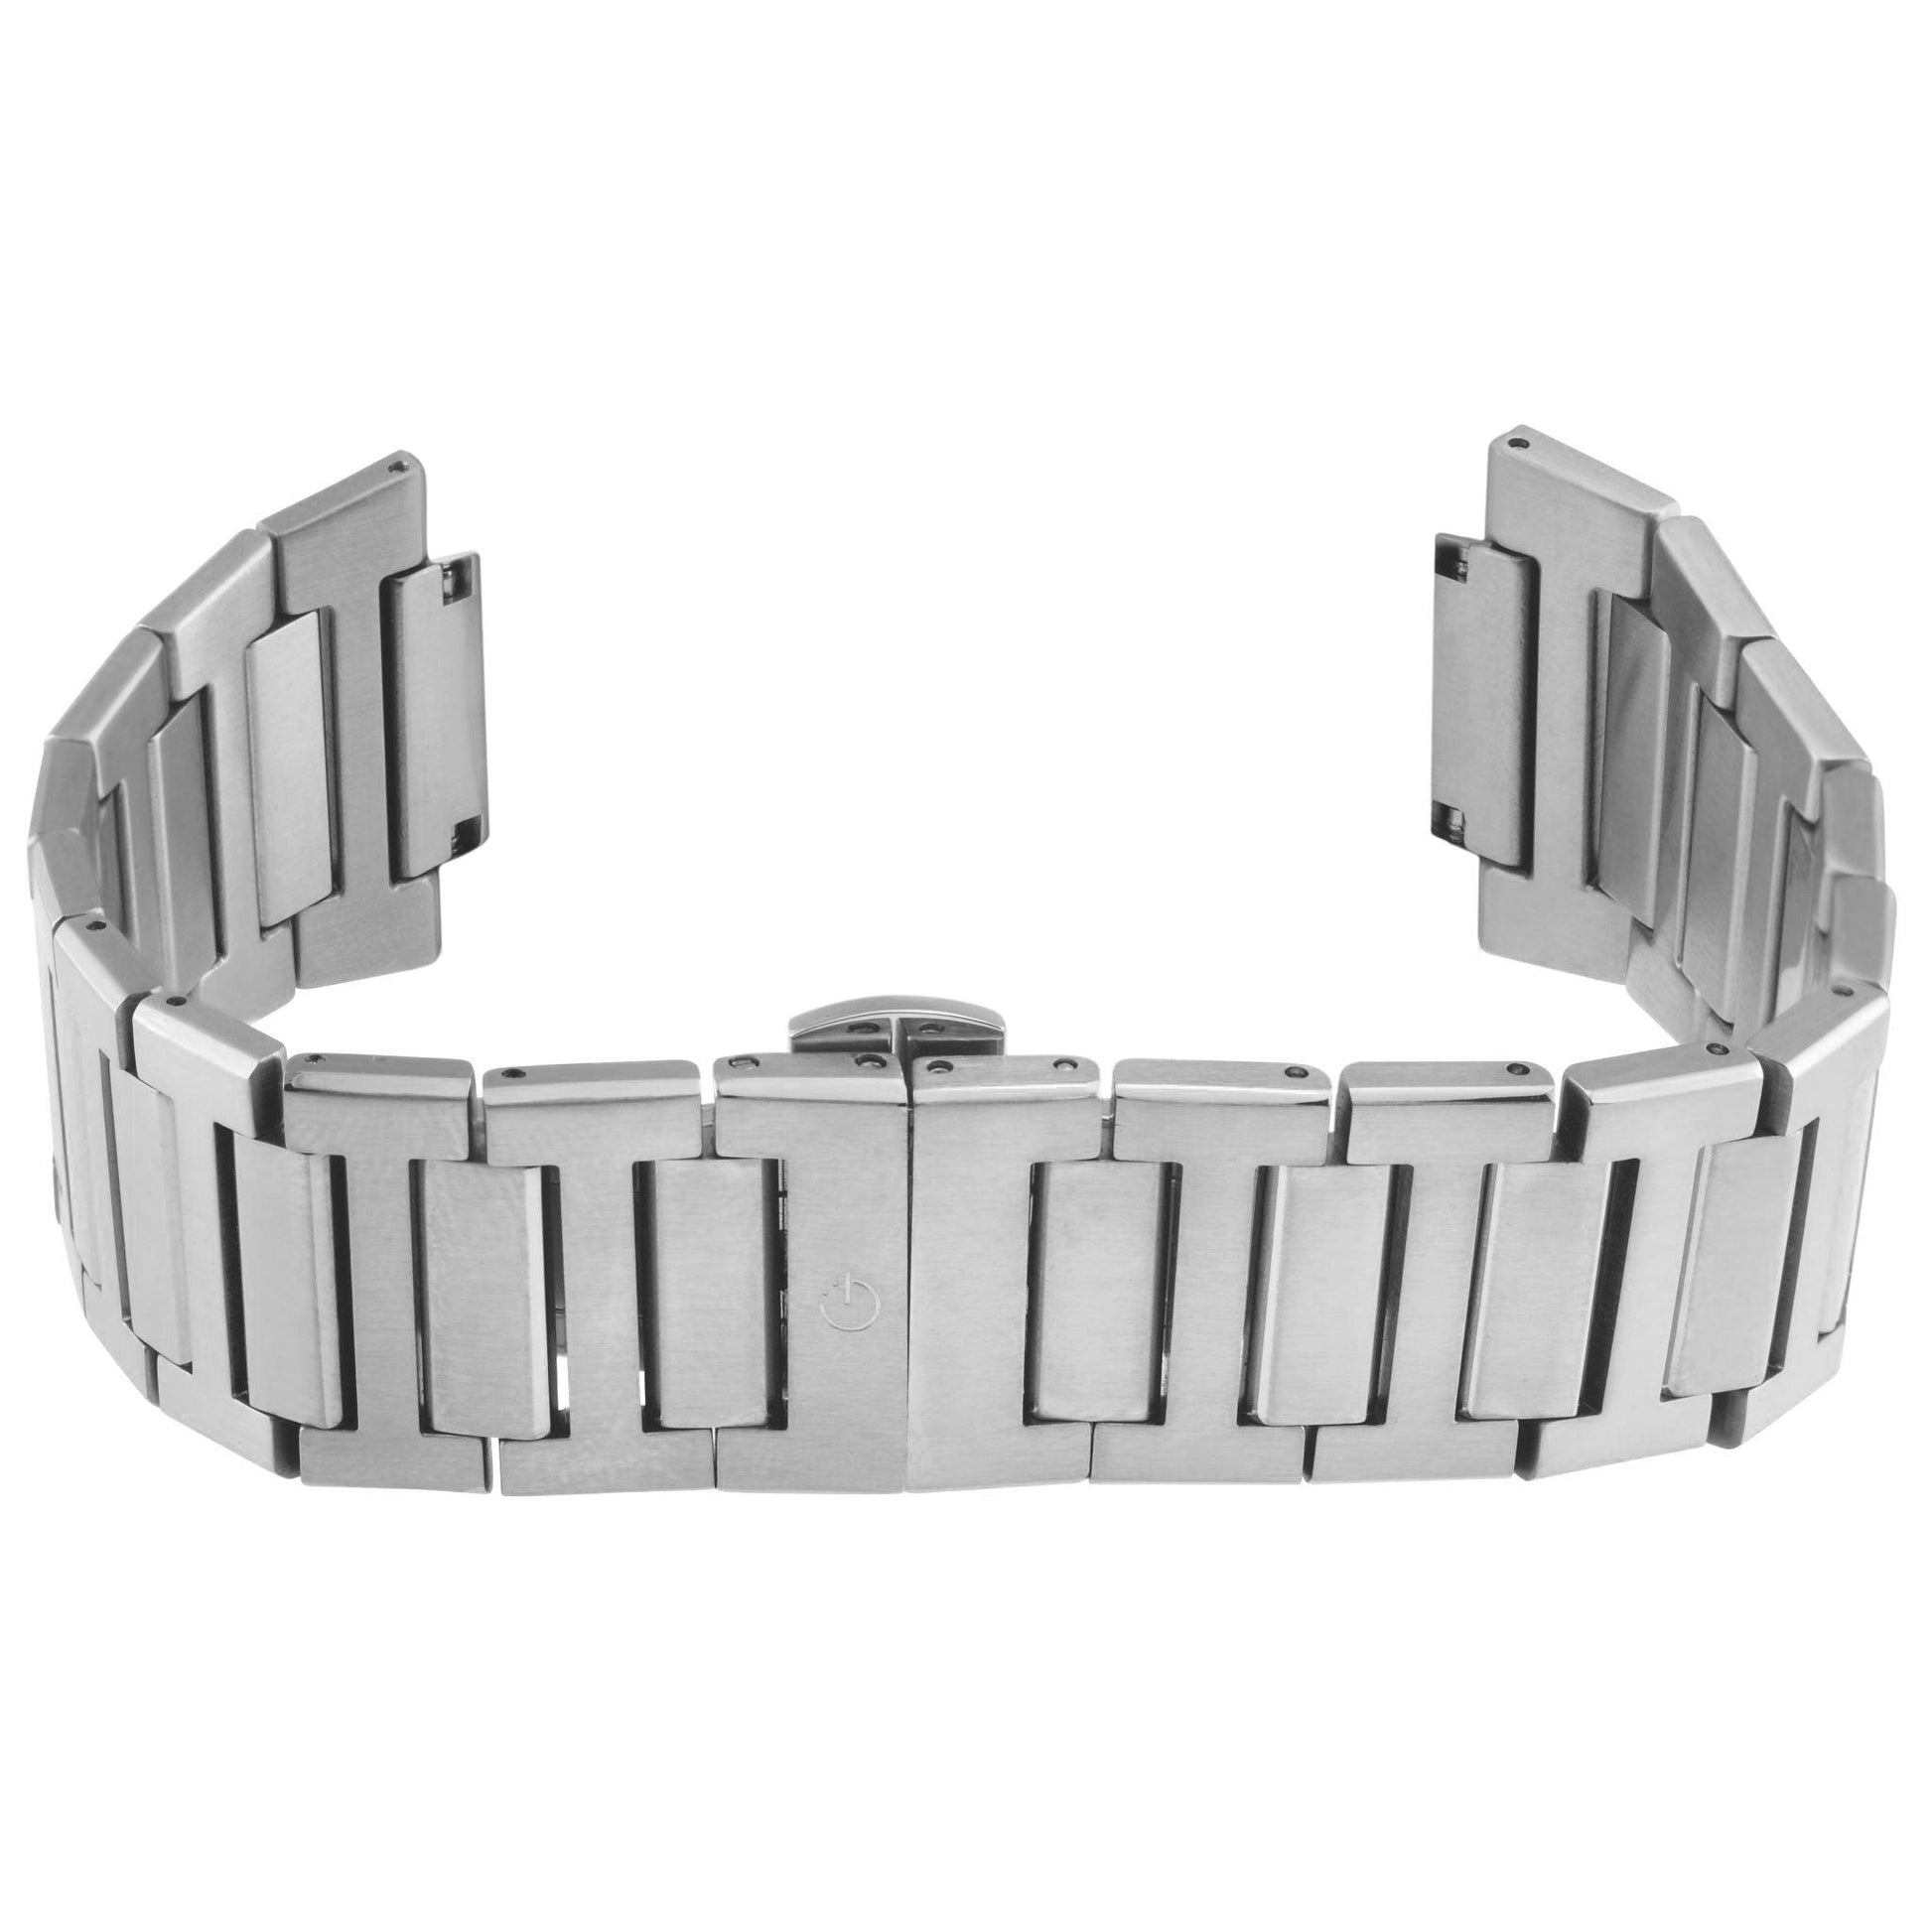 Gevril-Luxury-Swiss-Watches-Gevril High Line 16MM Metal Bracelet-GEV16.43.M.H